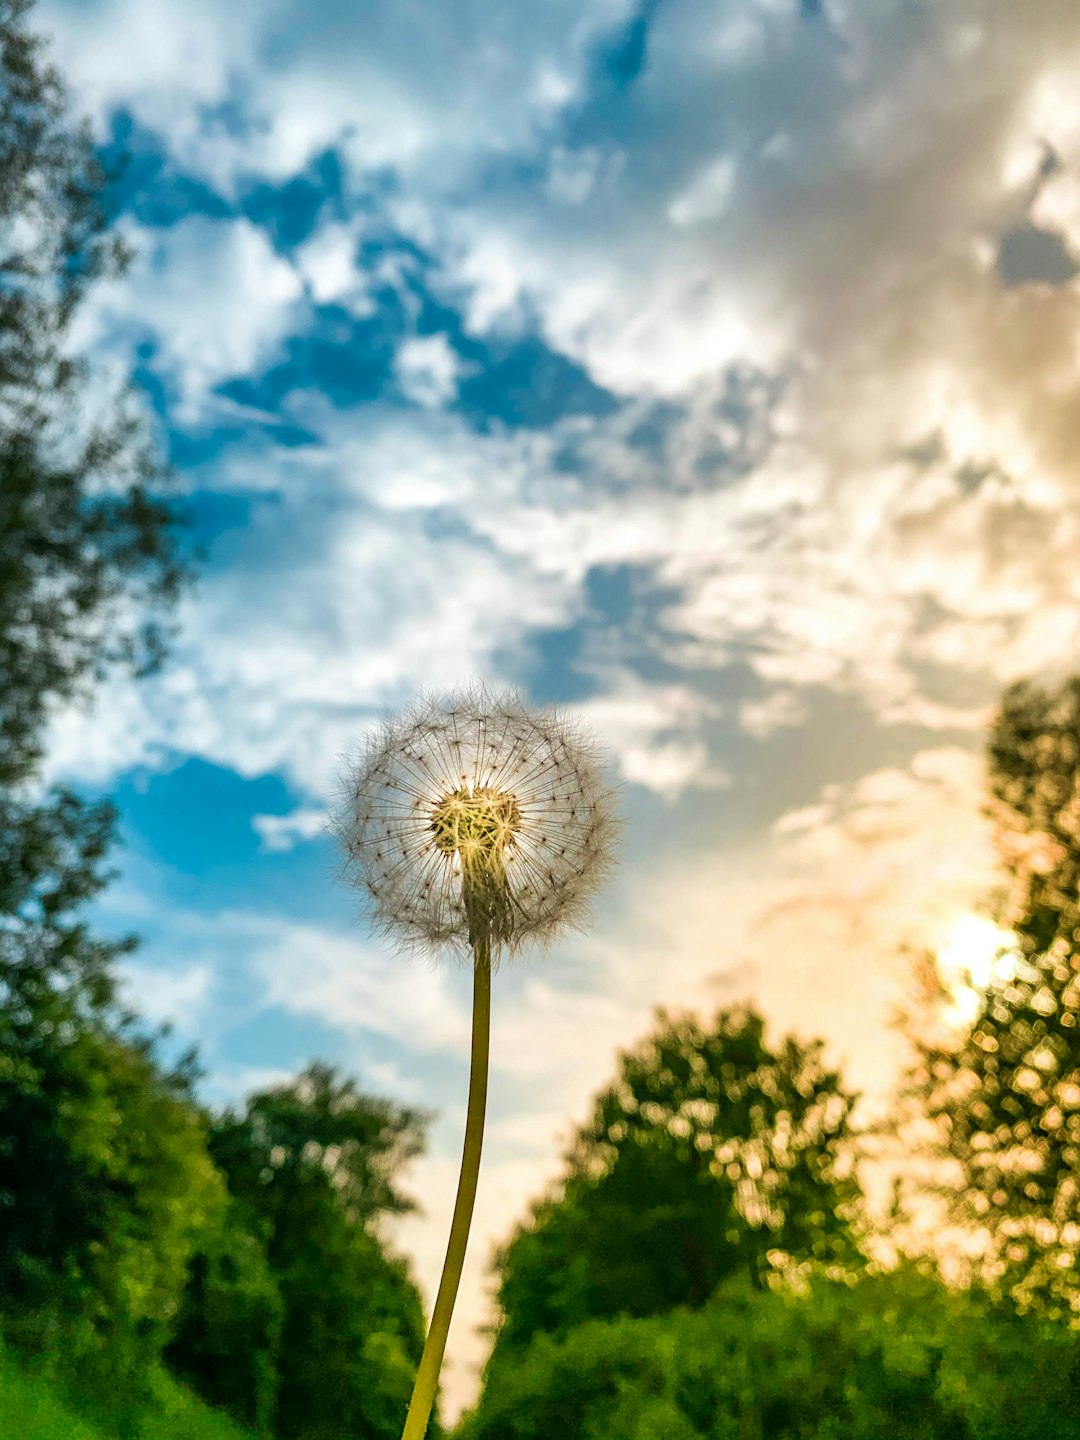 white dandelion under blue sky during daytime